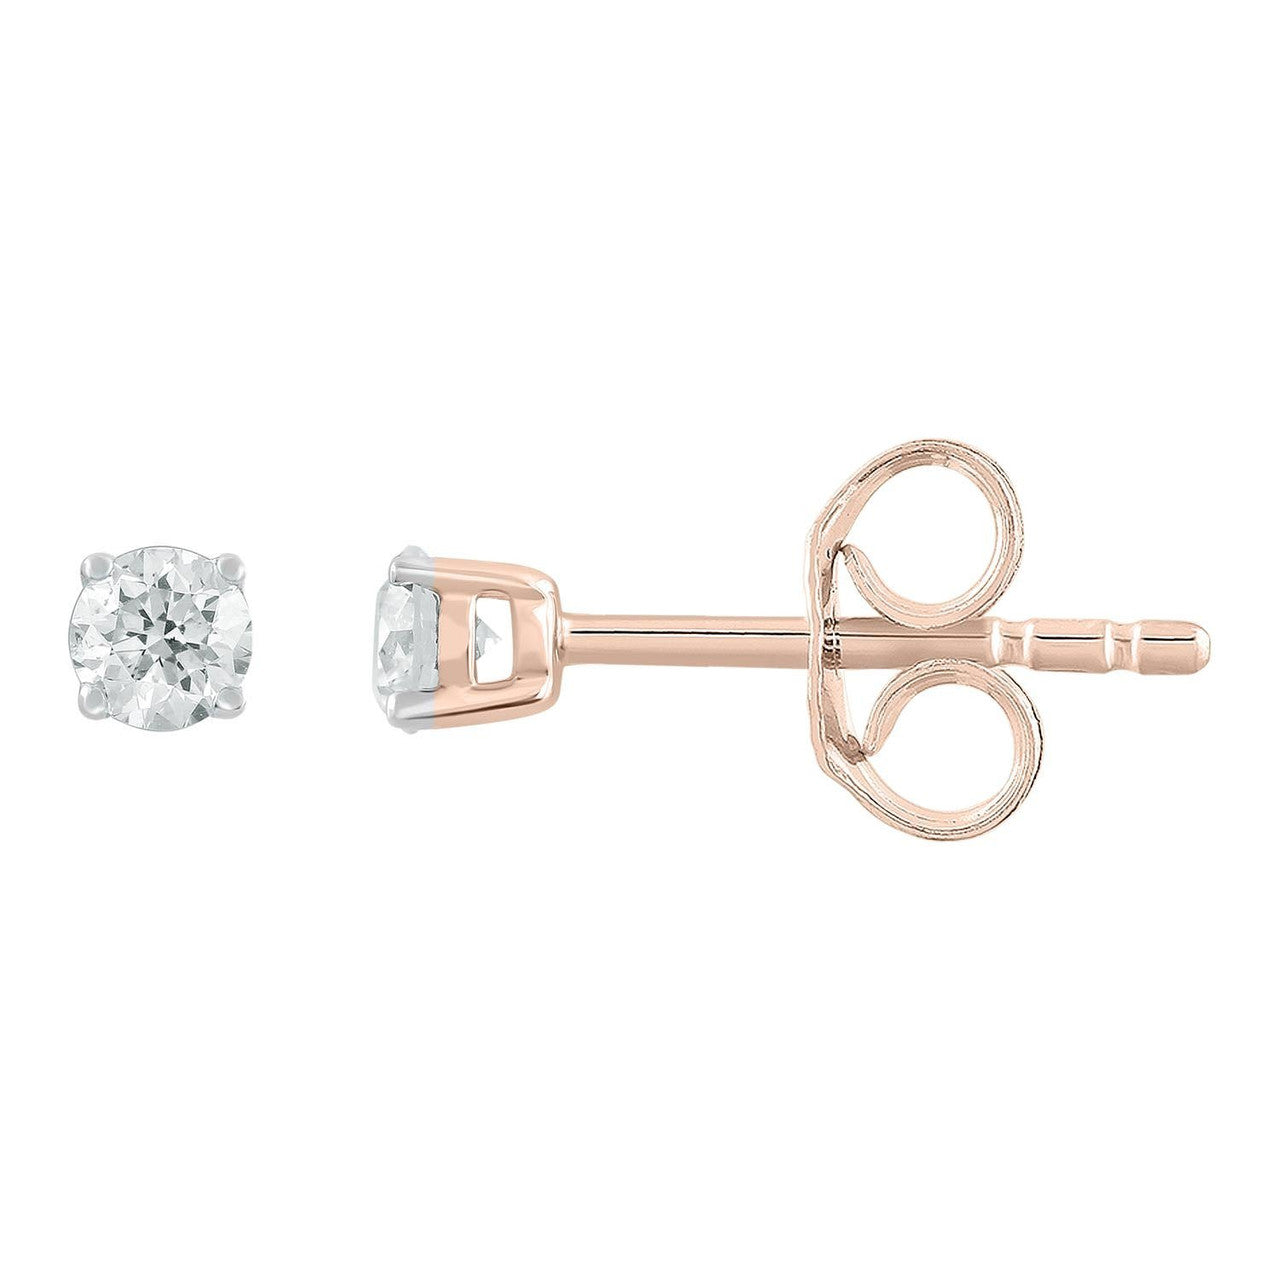 Ice Jewellery Stud Earrings with 0.15ct Diamonds in 9K Rose Gold | Ice Jewellery Australia